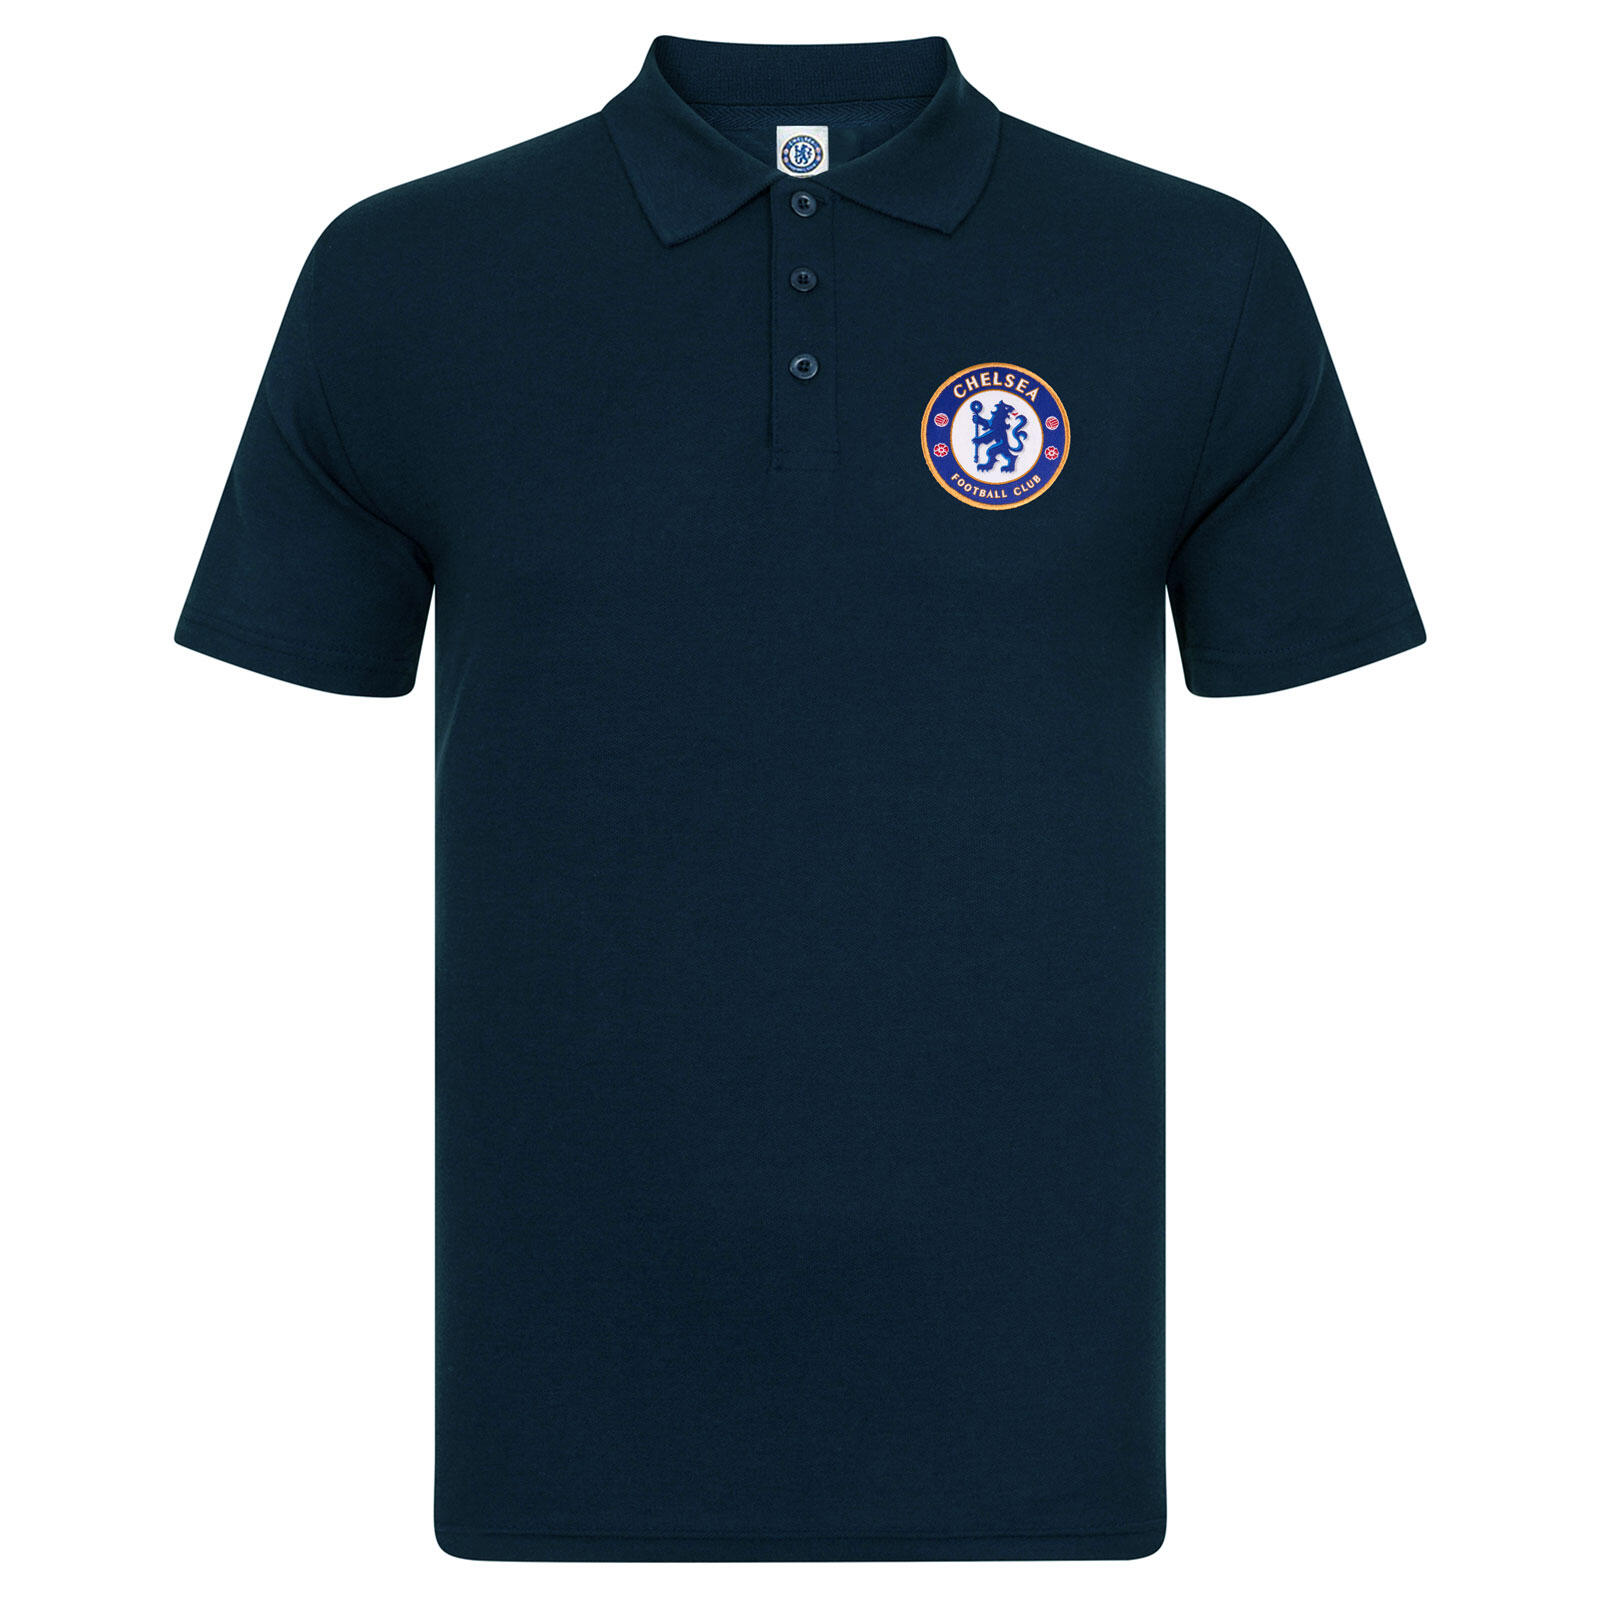 CHELSEA Chelsea FC Boys Polo Shirt Crest Kids OFFICIAL Football Gift